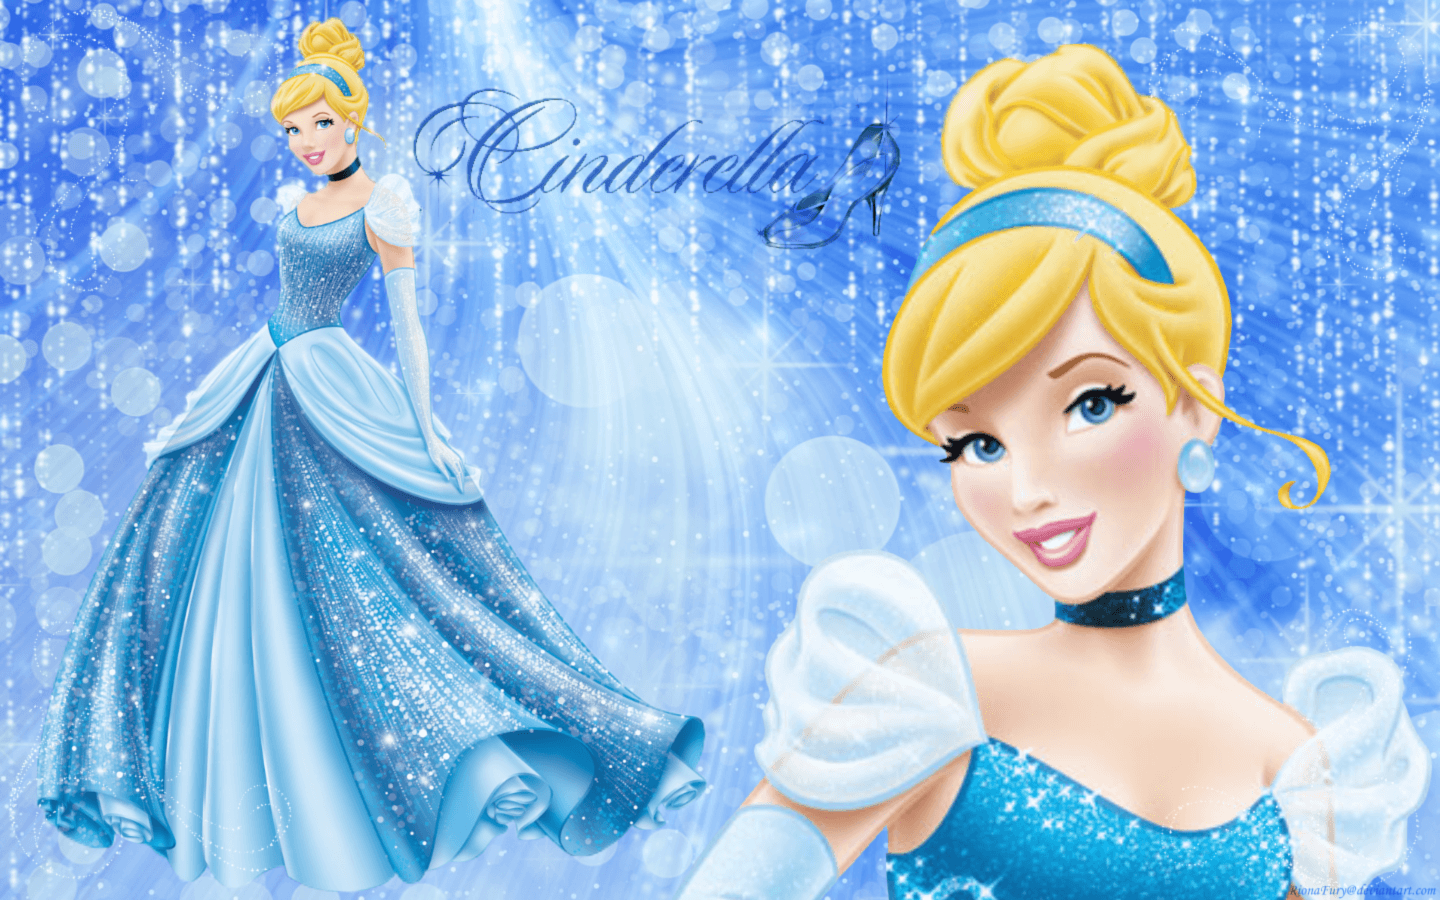 Disney Love image Cinderella's New Look 2012 redesign HD wallpaper